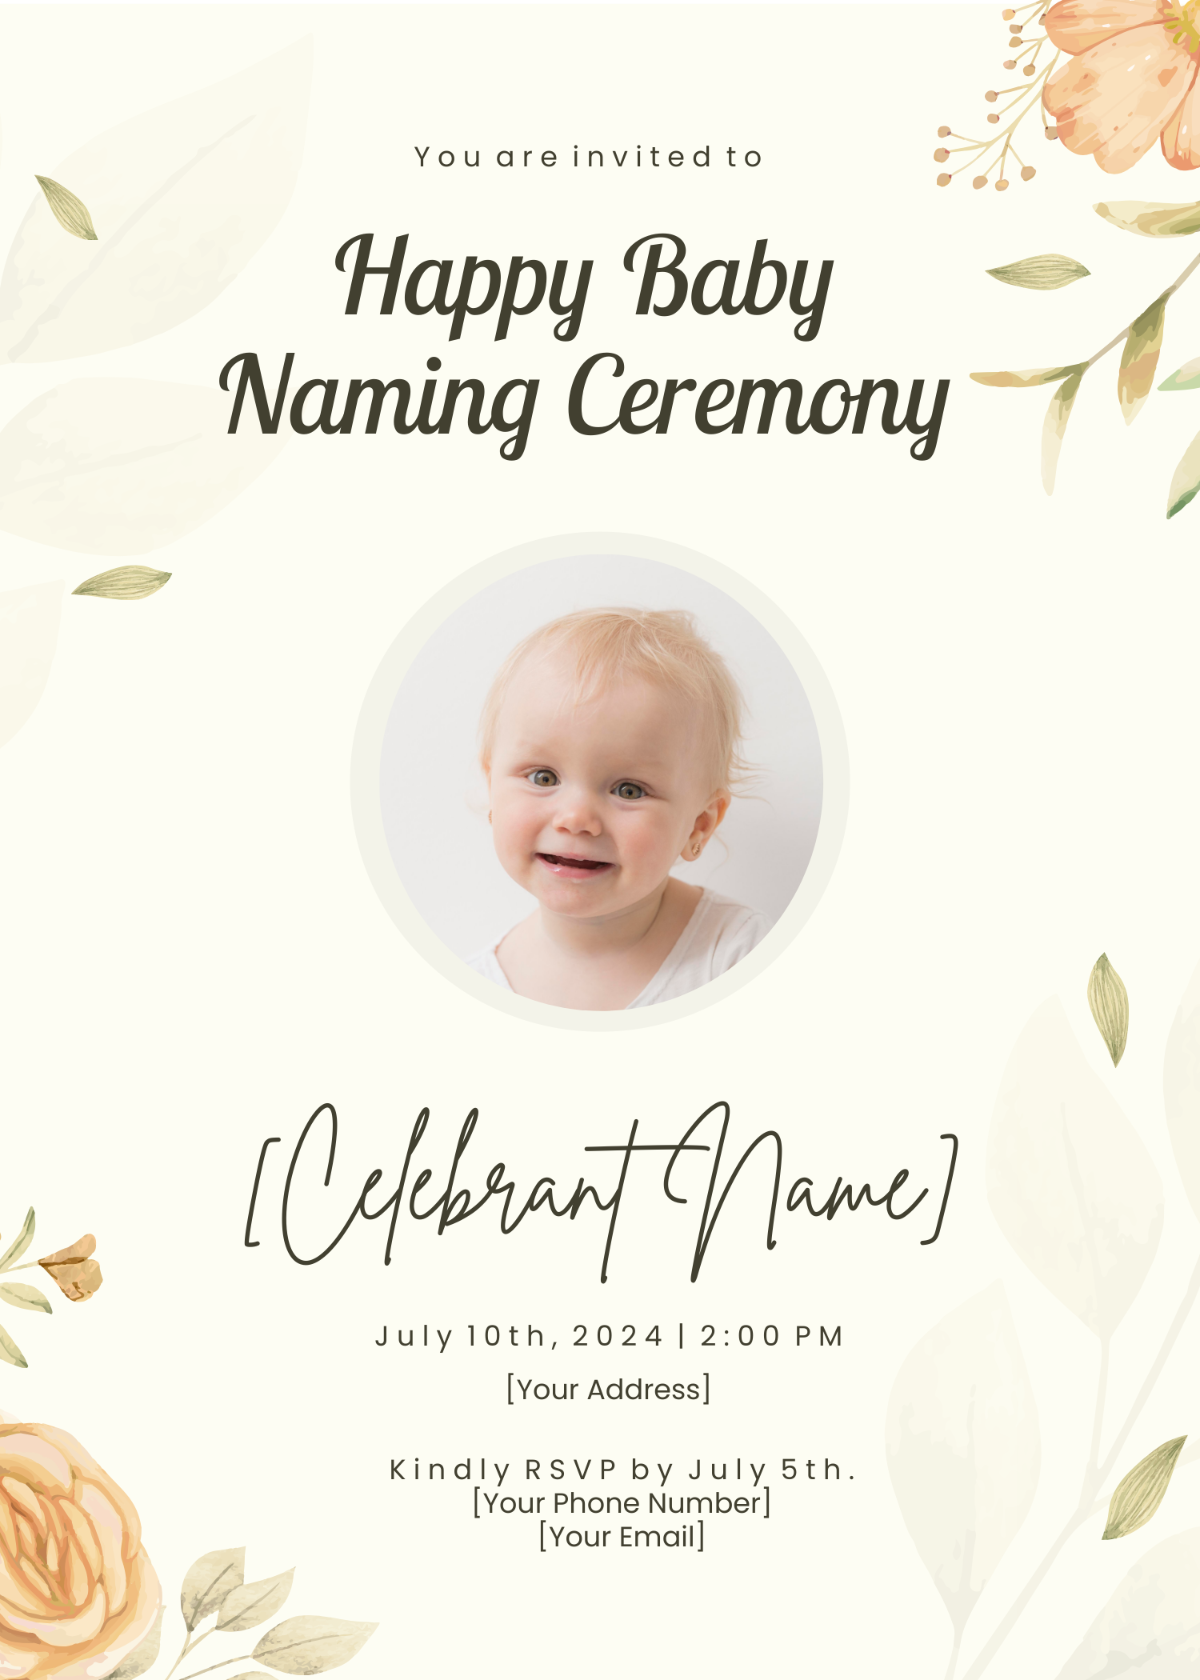 Happy Baby Naming Ceremony Invitation Template